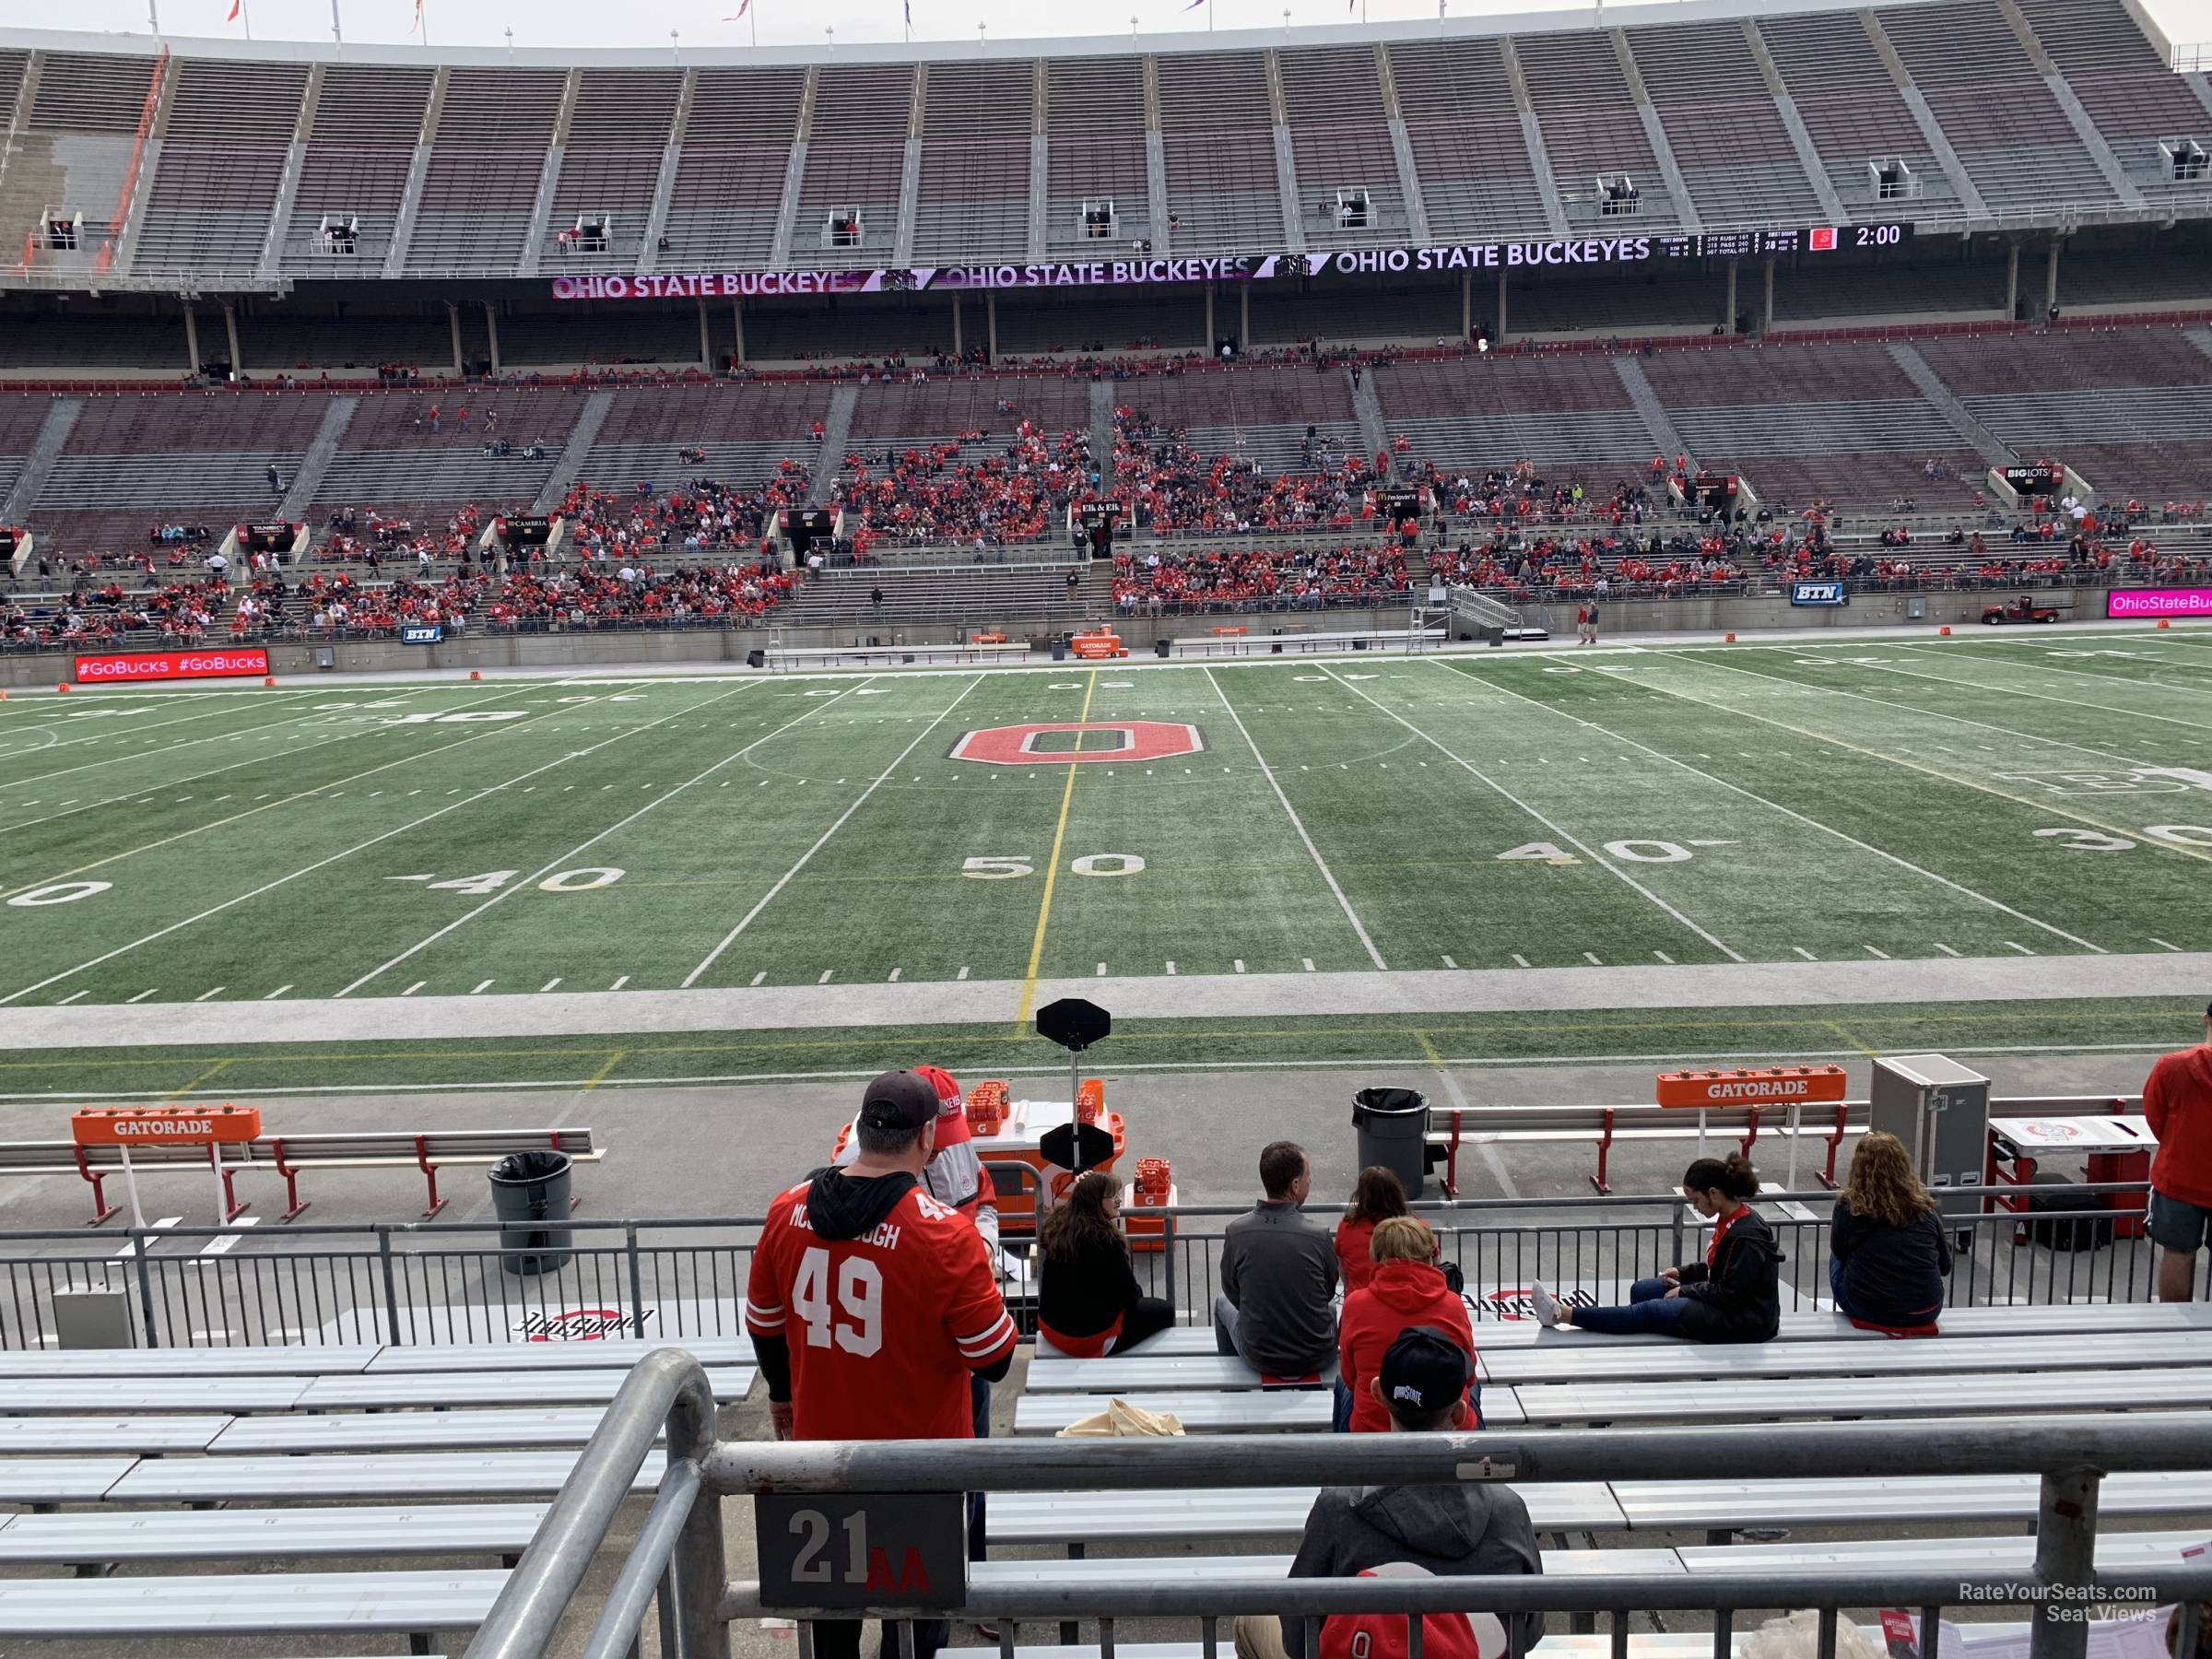 section 21aa, row 11 seat view  - ohio stadium